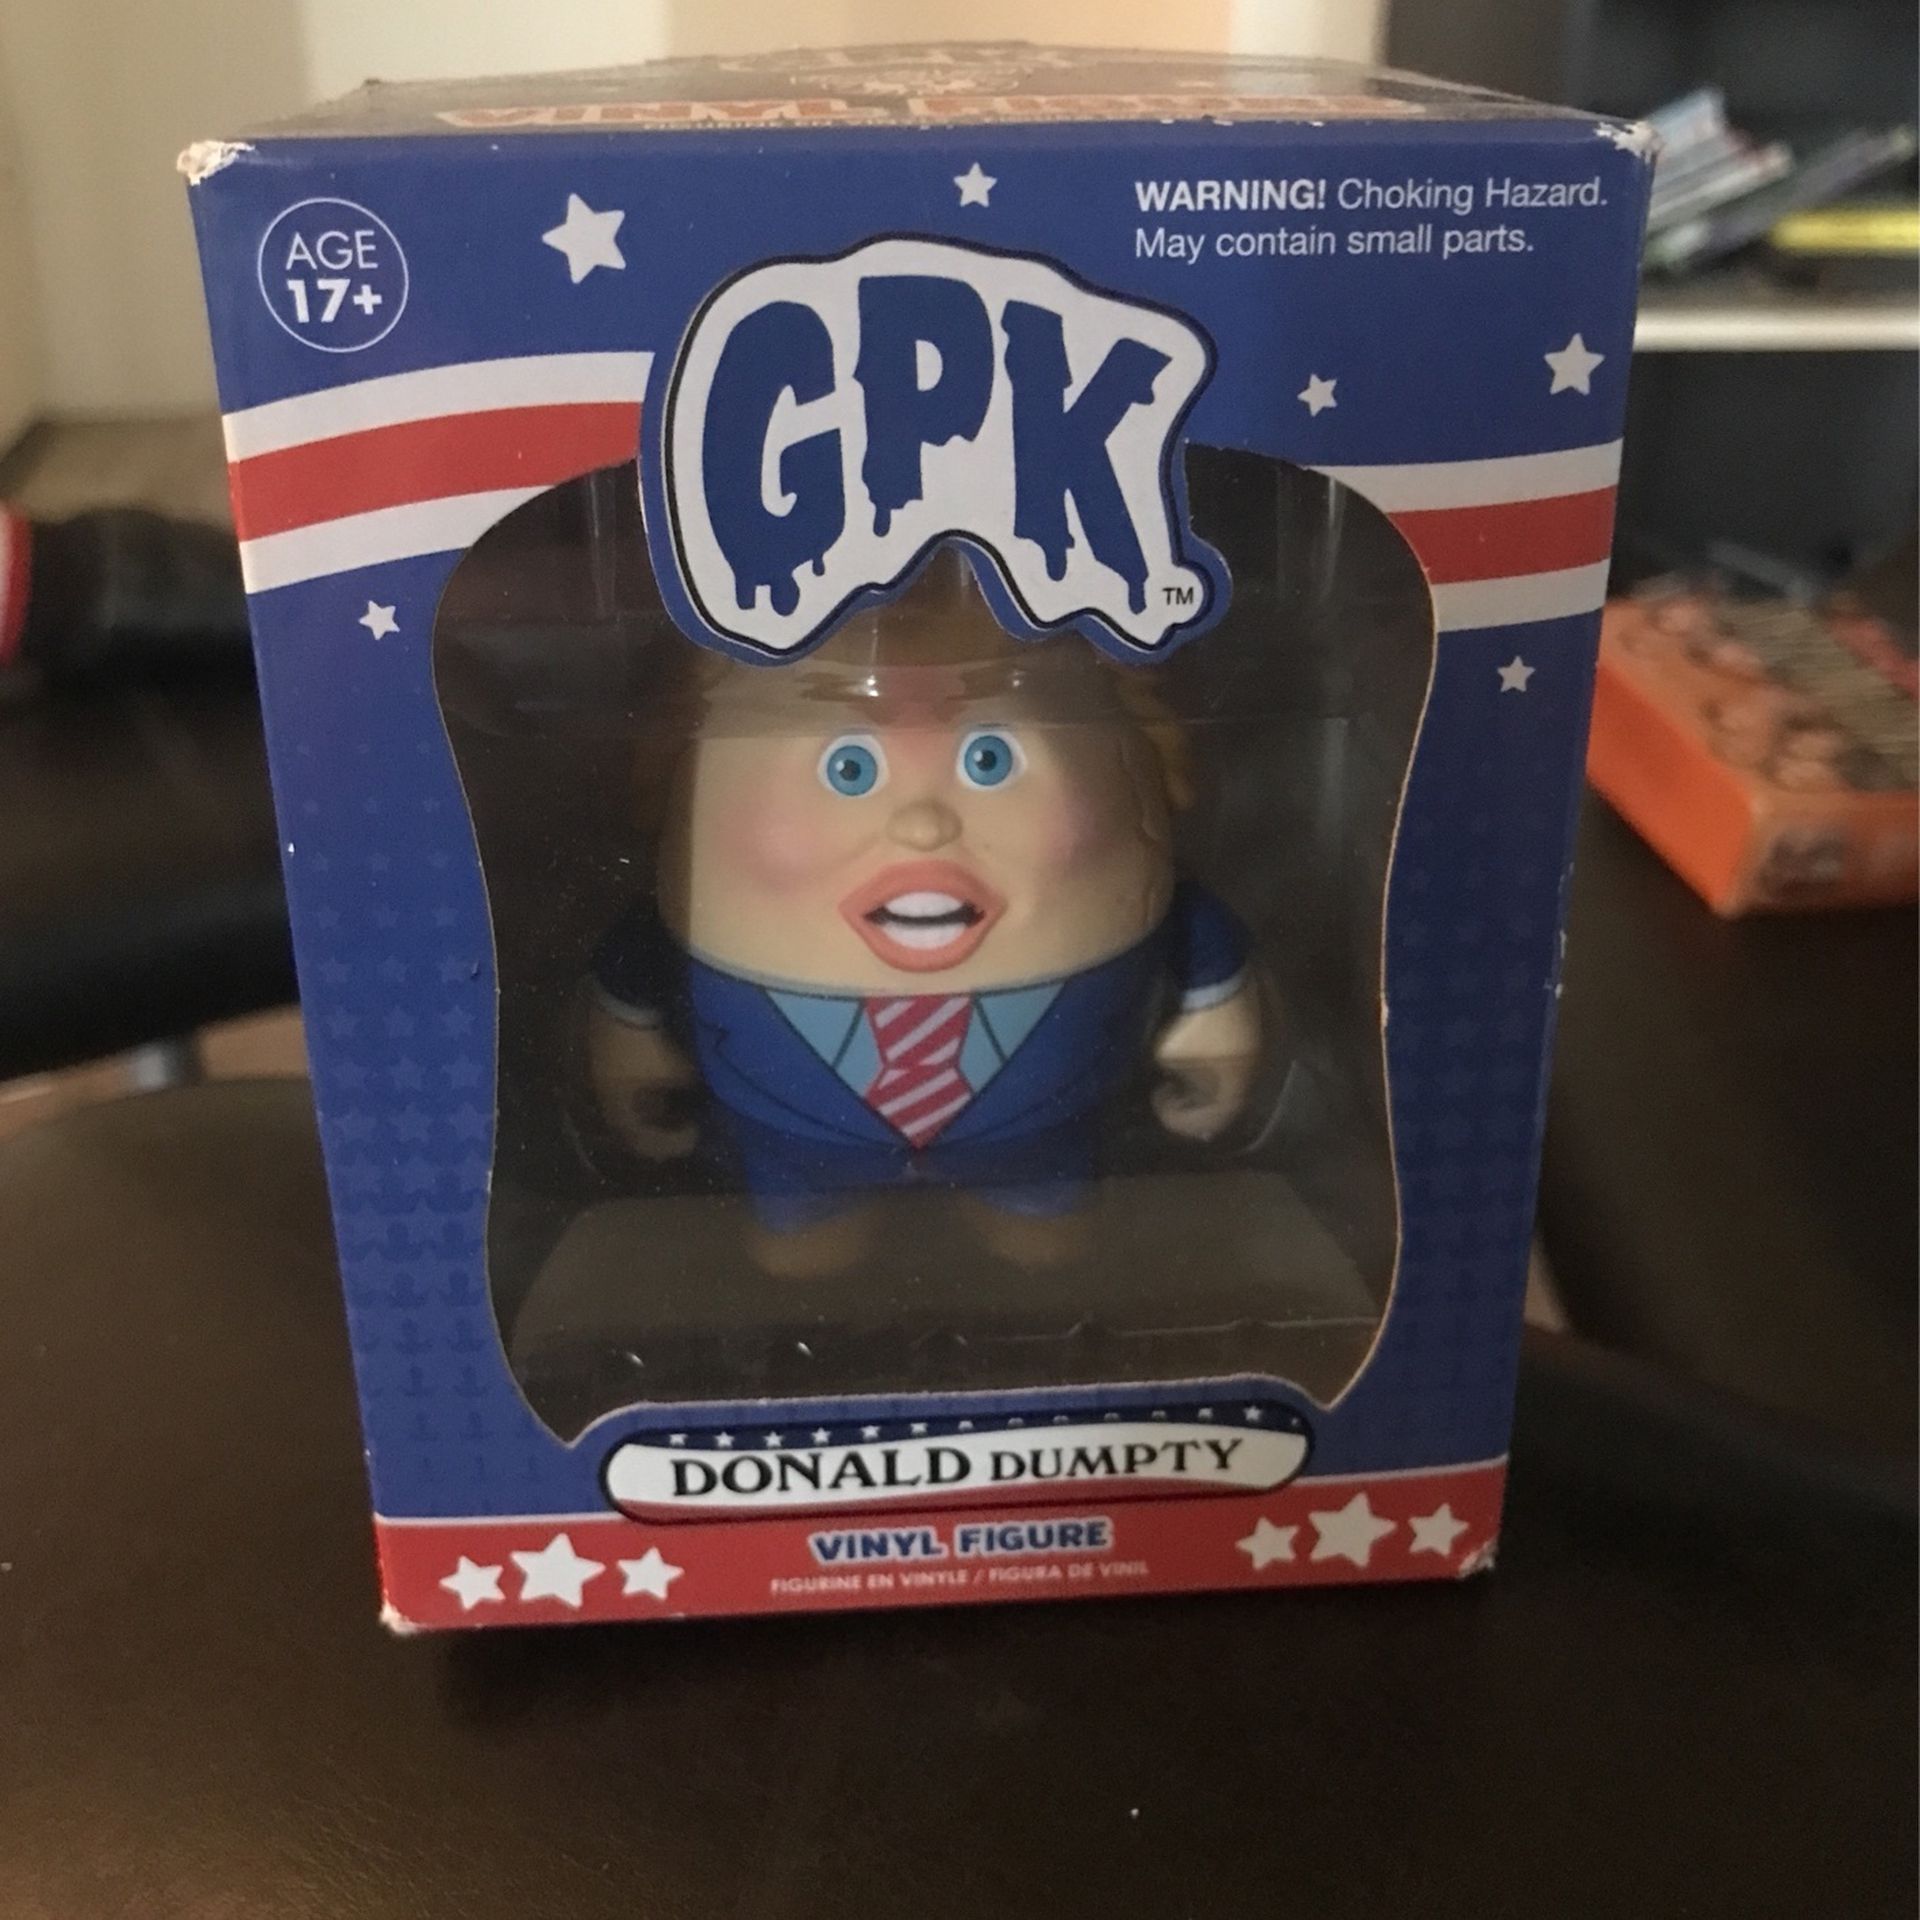 “Donald Dumpty” - Donald Trump Vinyl Figure - GPK - Garbage Pail Kids - TOPPS